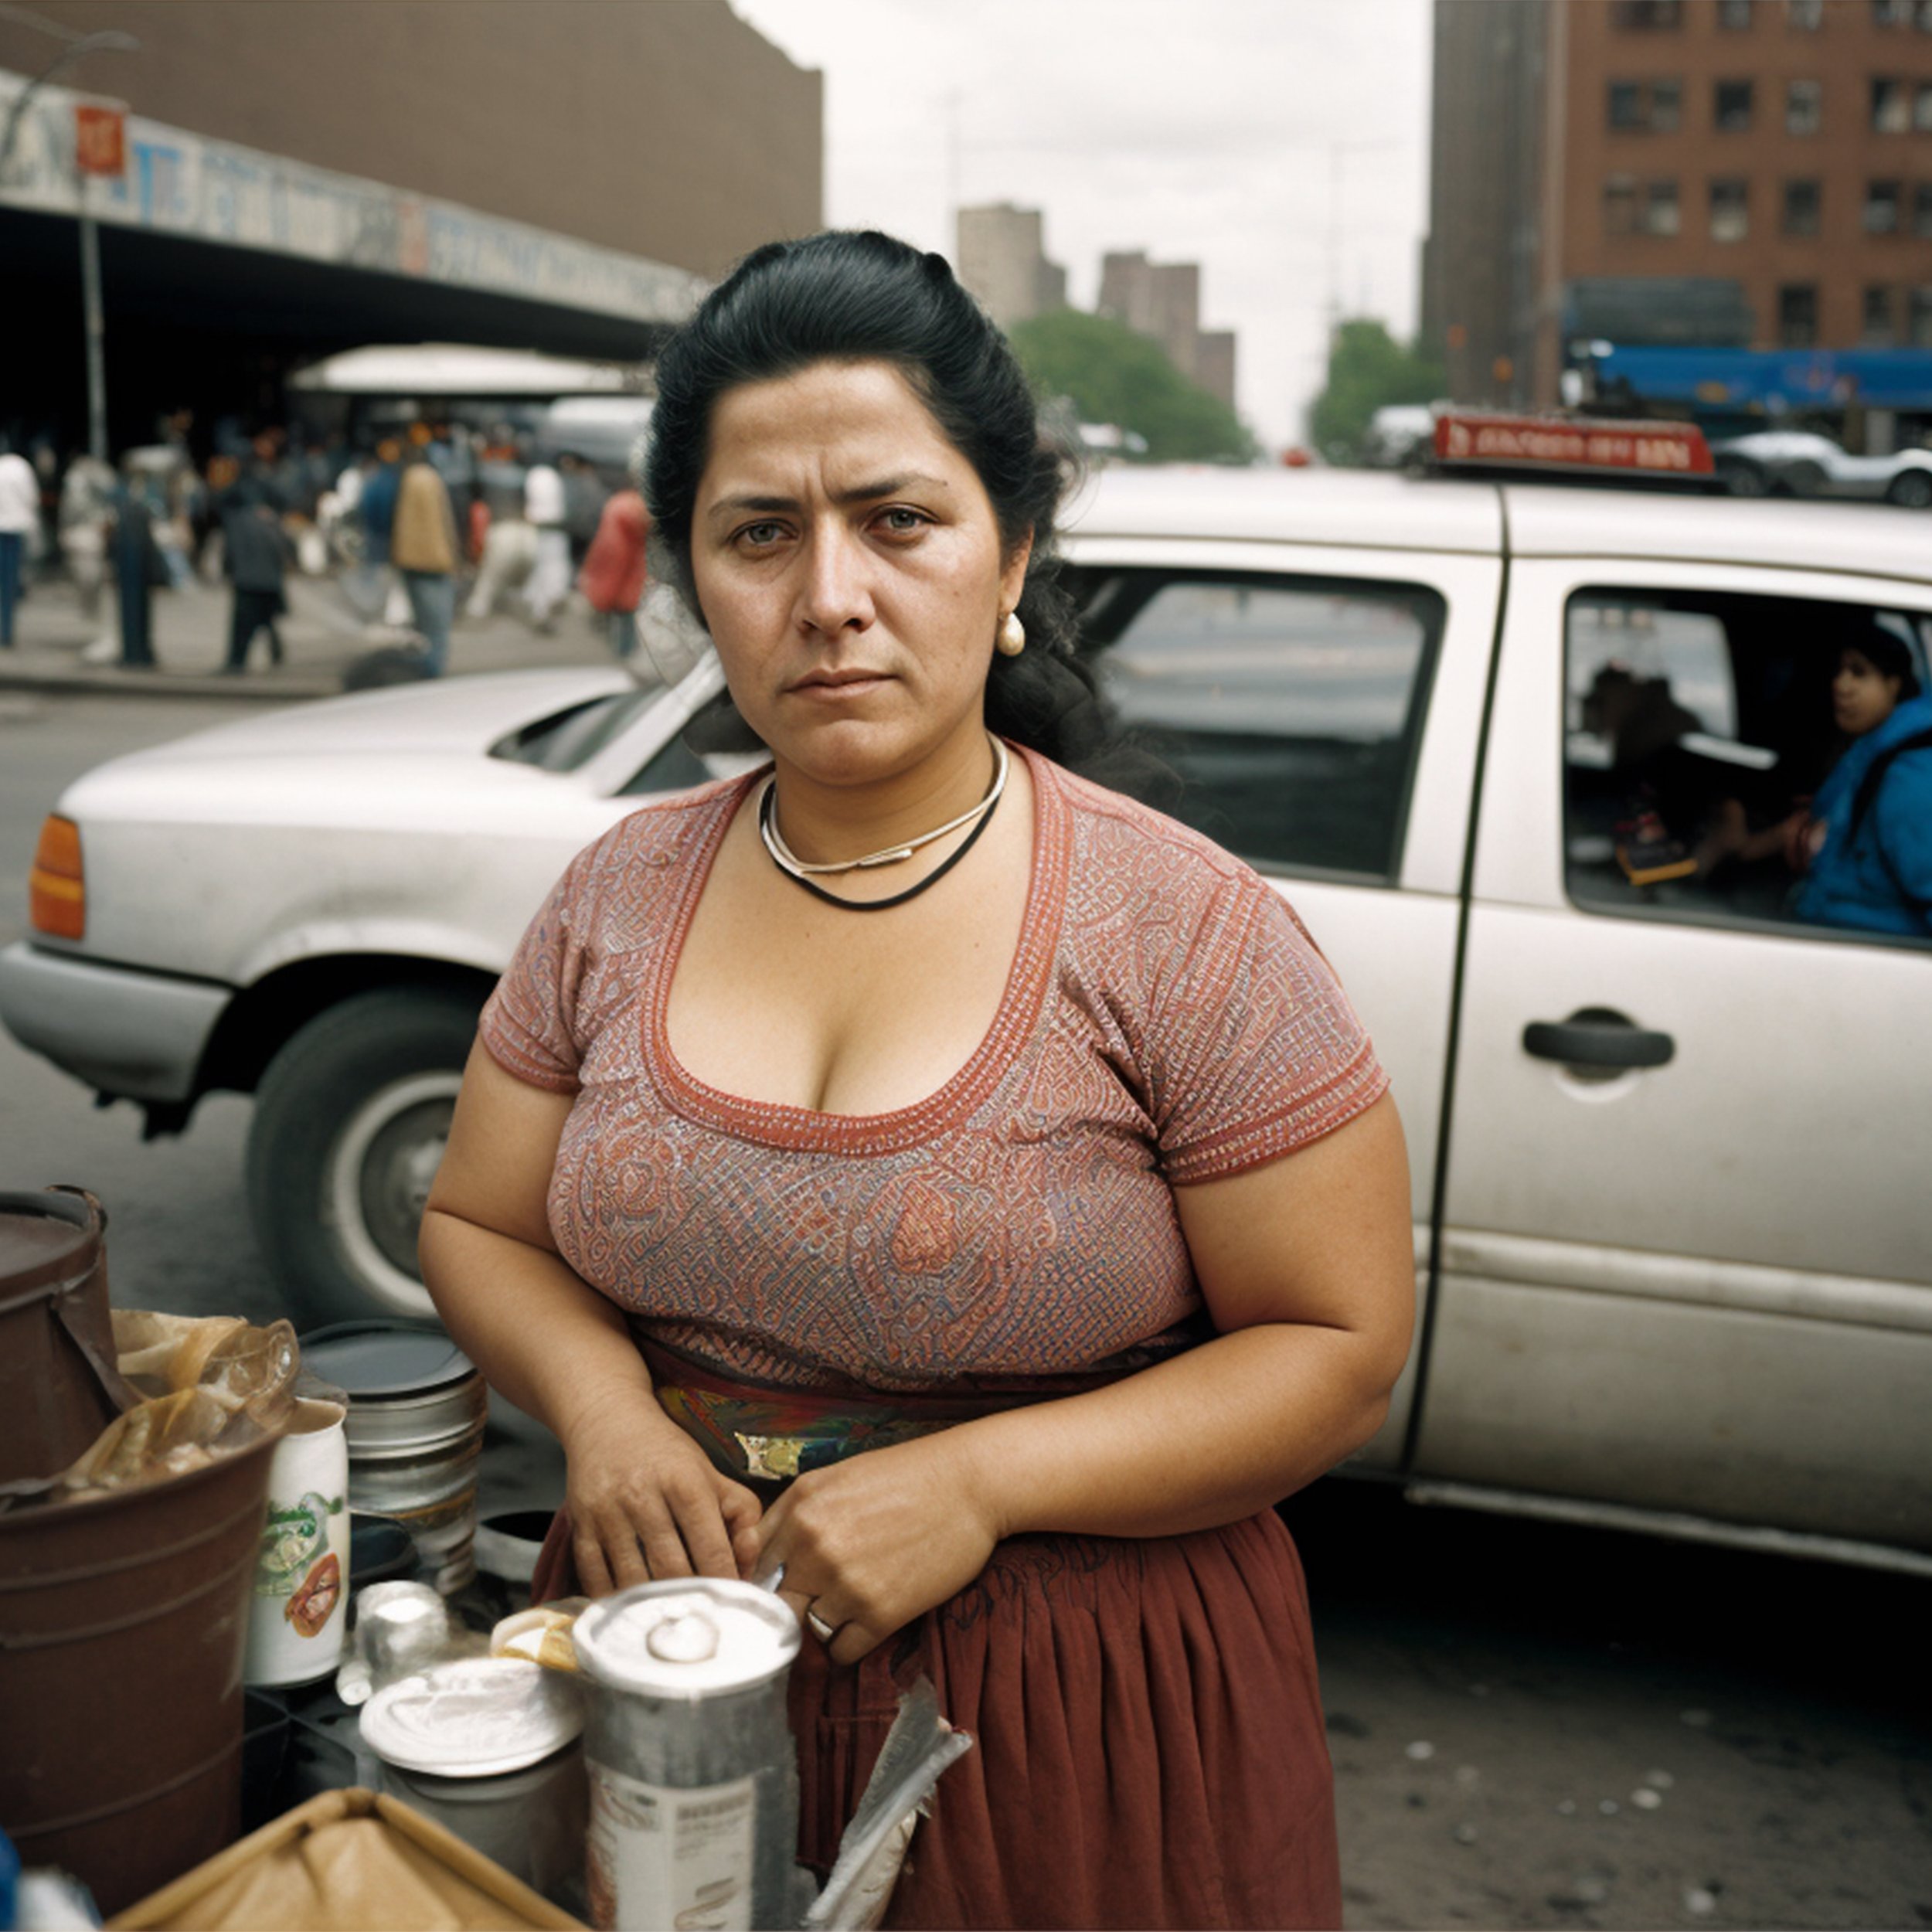 Street vendor, Bronx